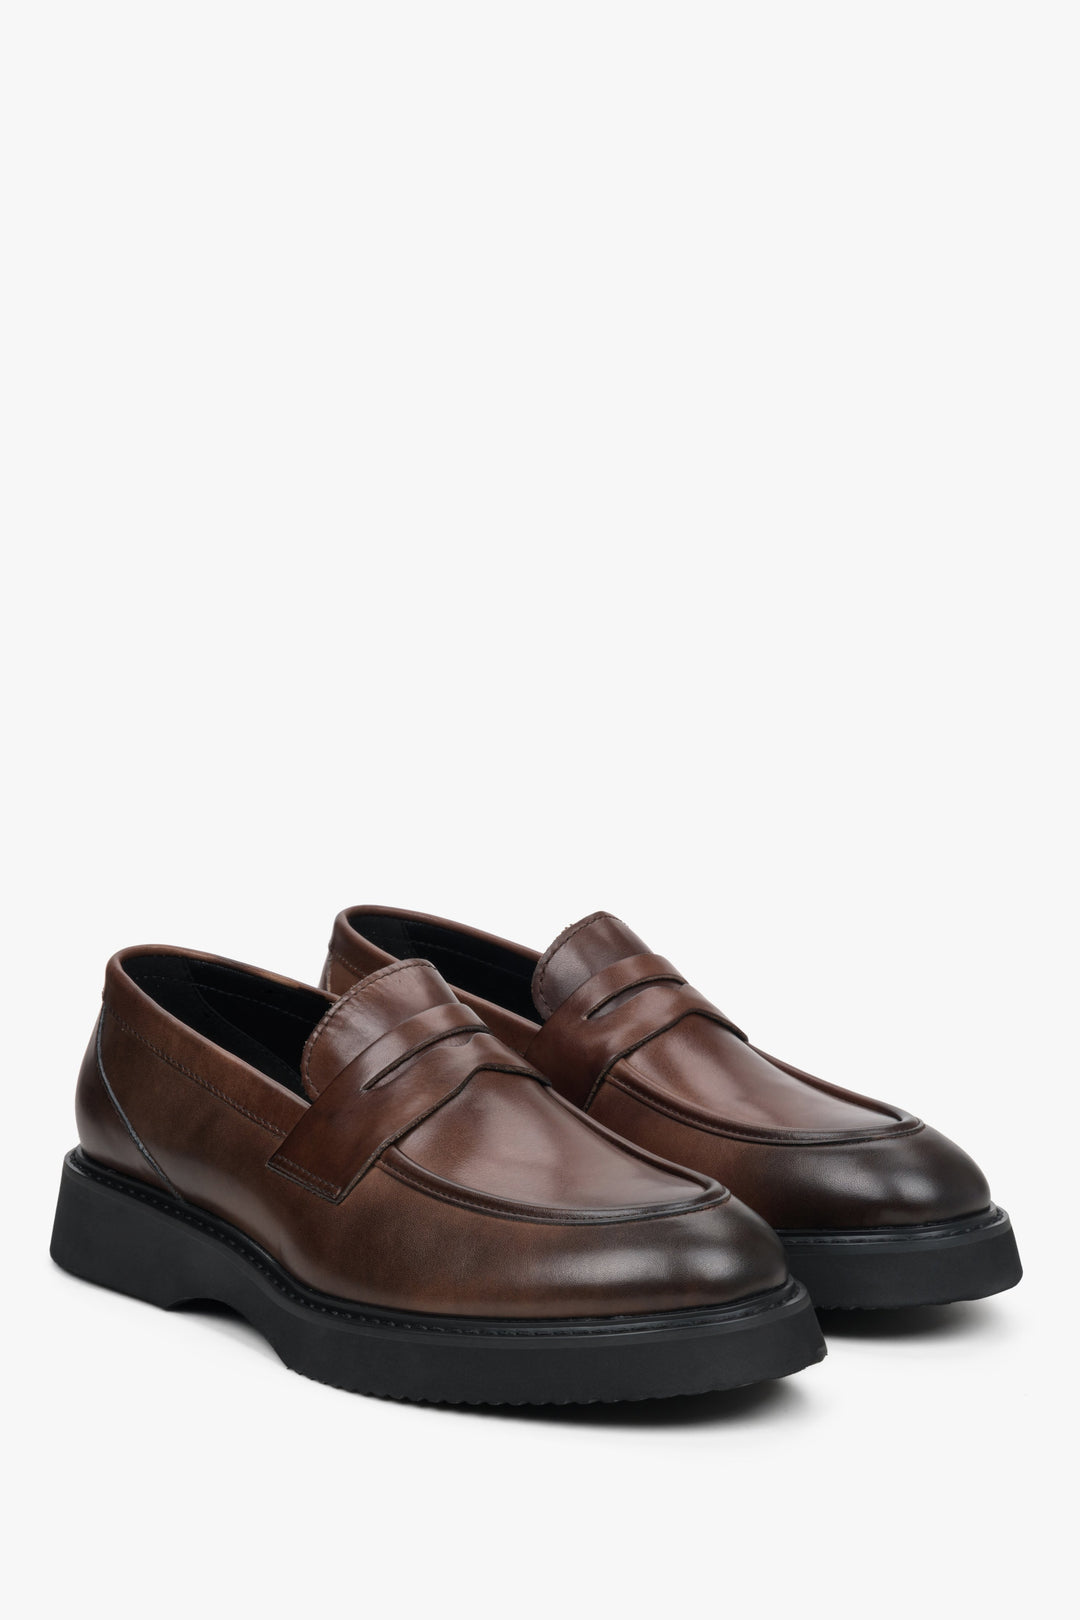 Men's dark brown leather Estro loafers.